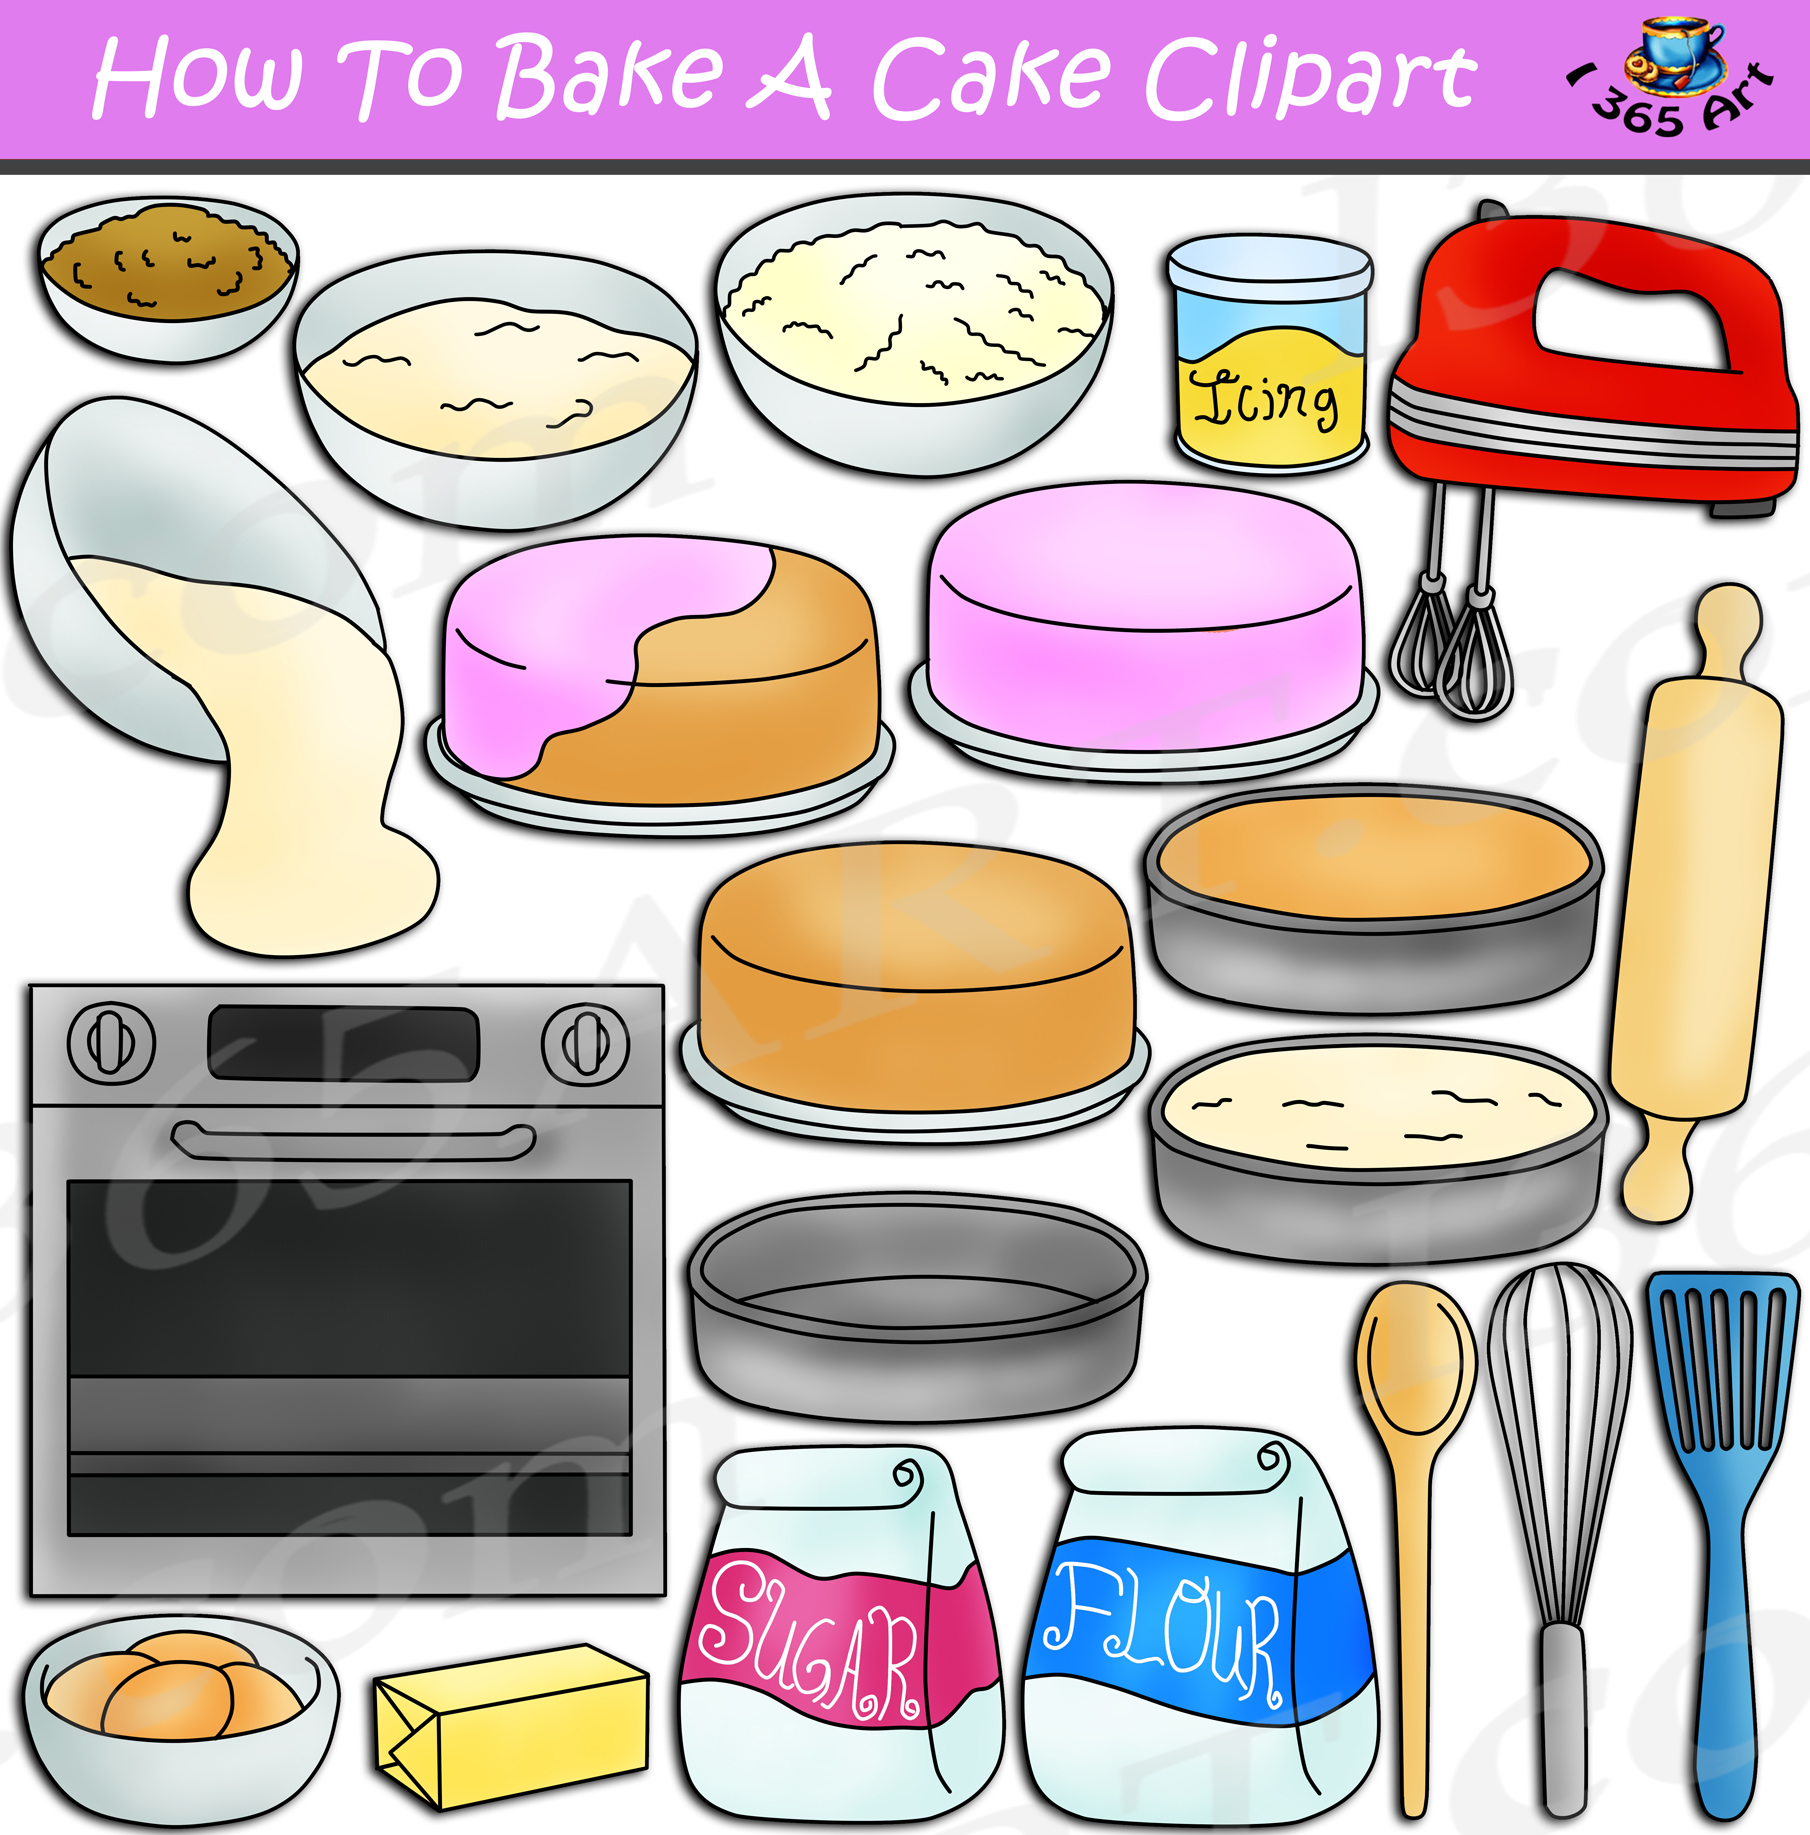 bake a cake clipart